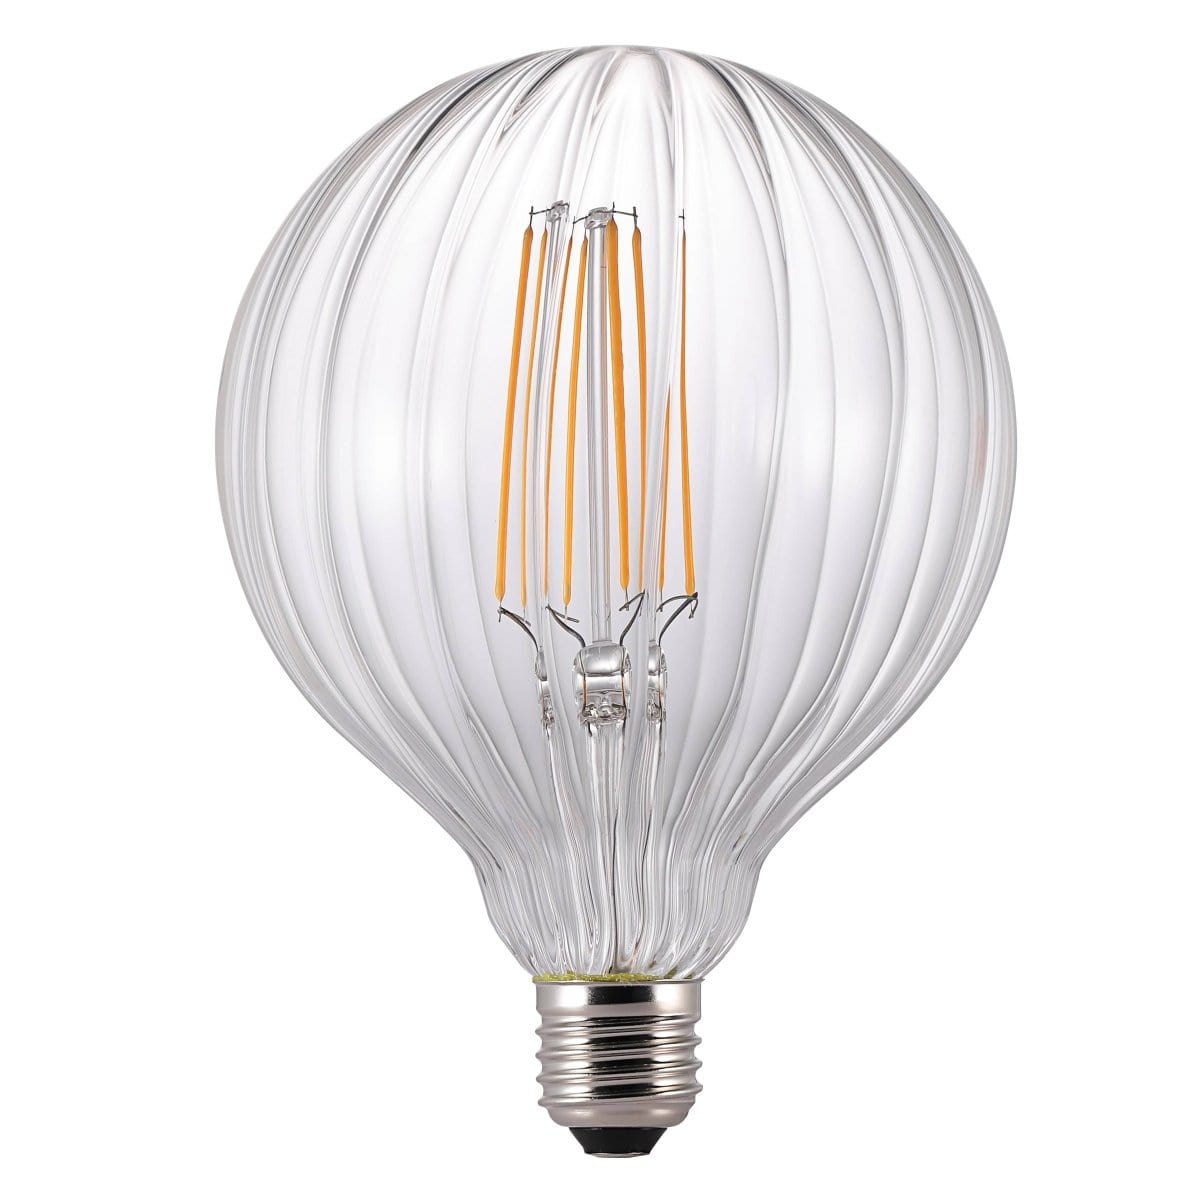 Heavenly Chandeliers Light Bulbs Avra Decorative E27 G125 Light Bulb, clear glass